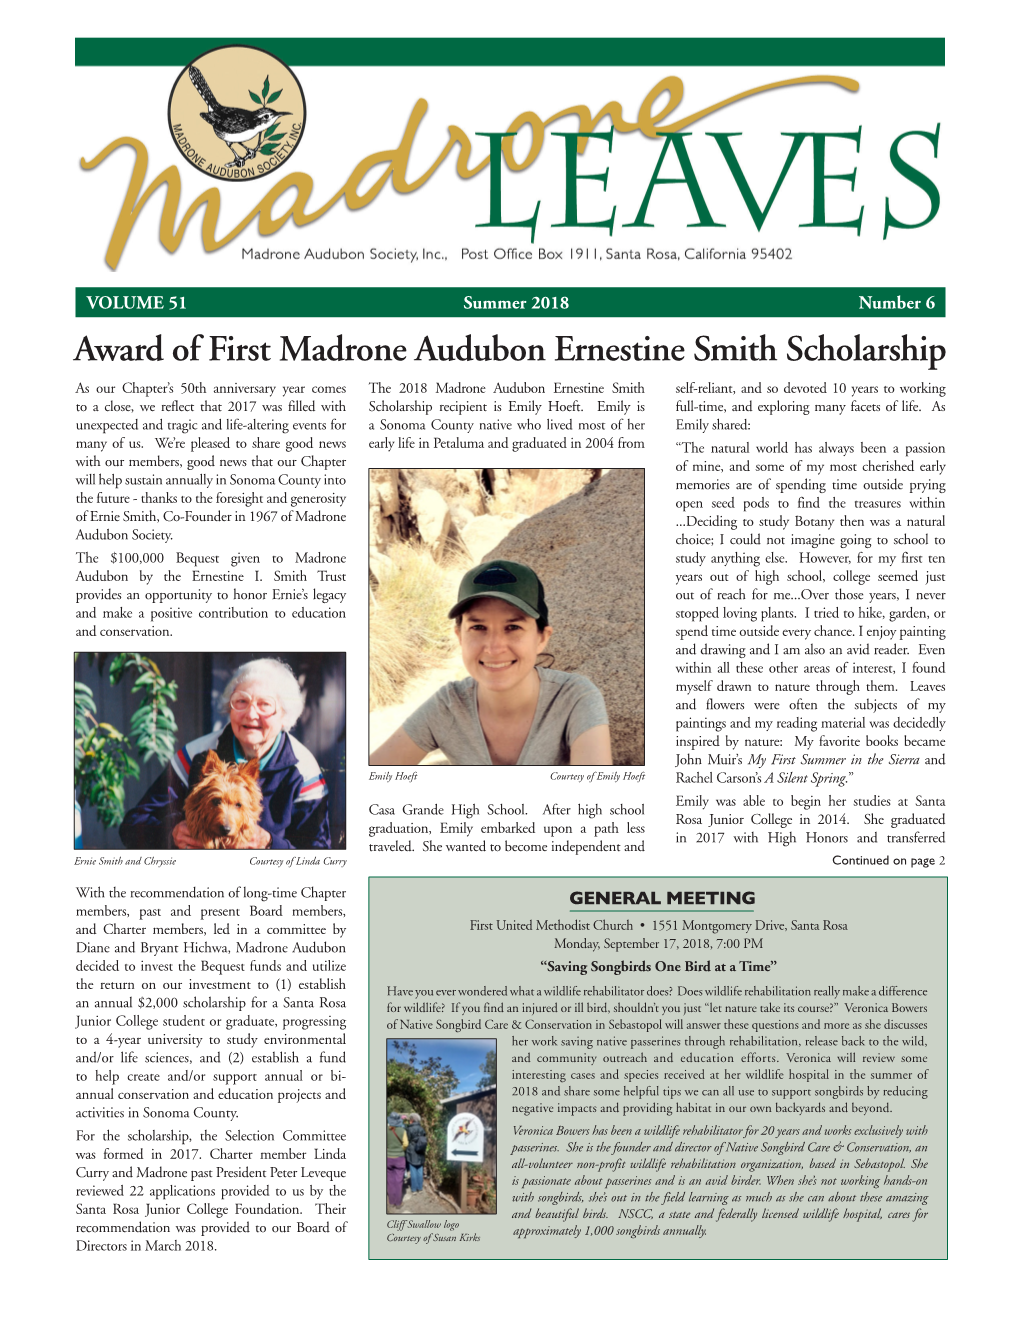 Award of First Madrone Audubon Ernestine Smith Scholarship